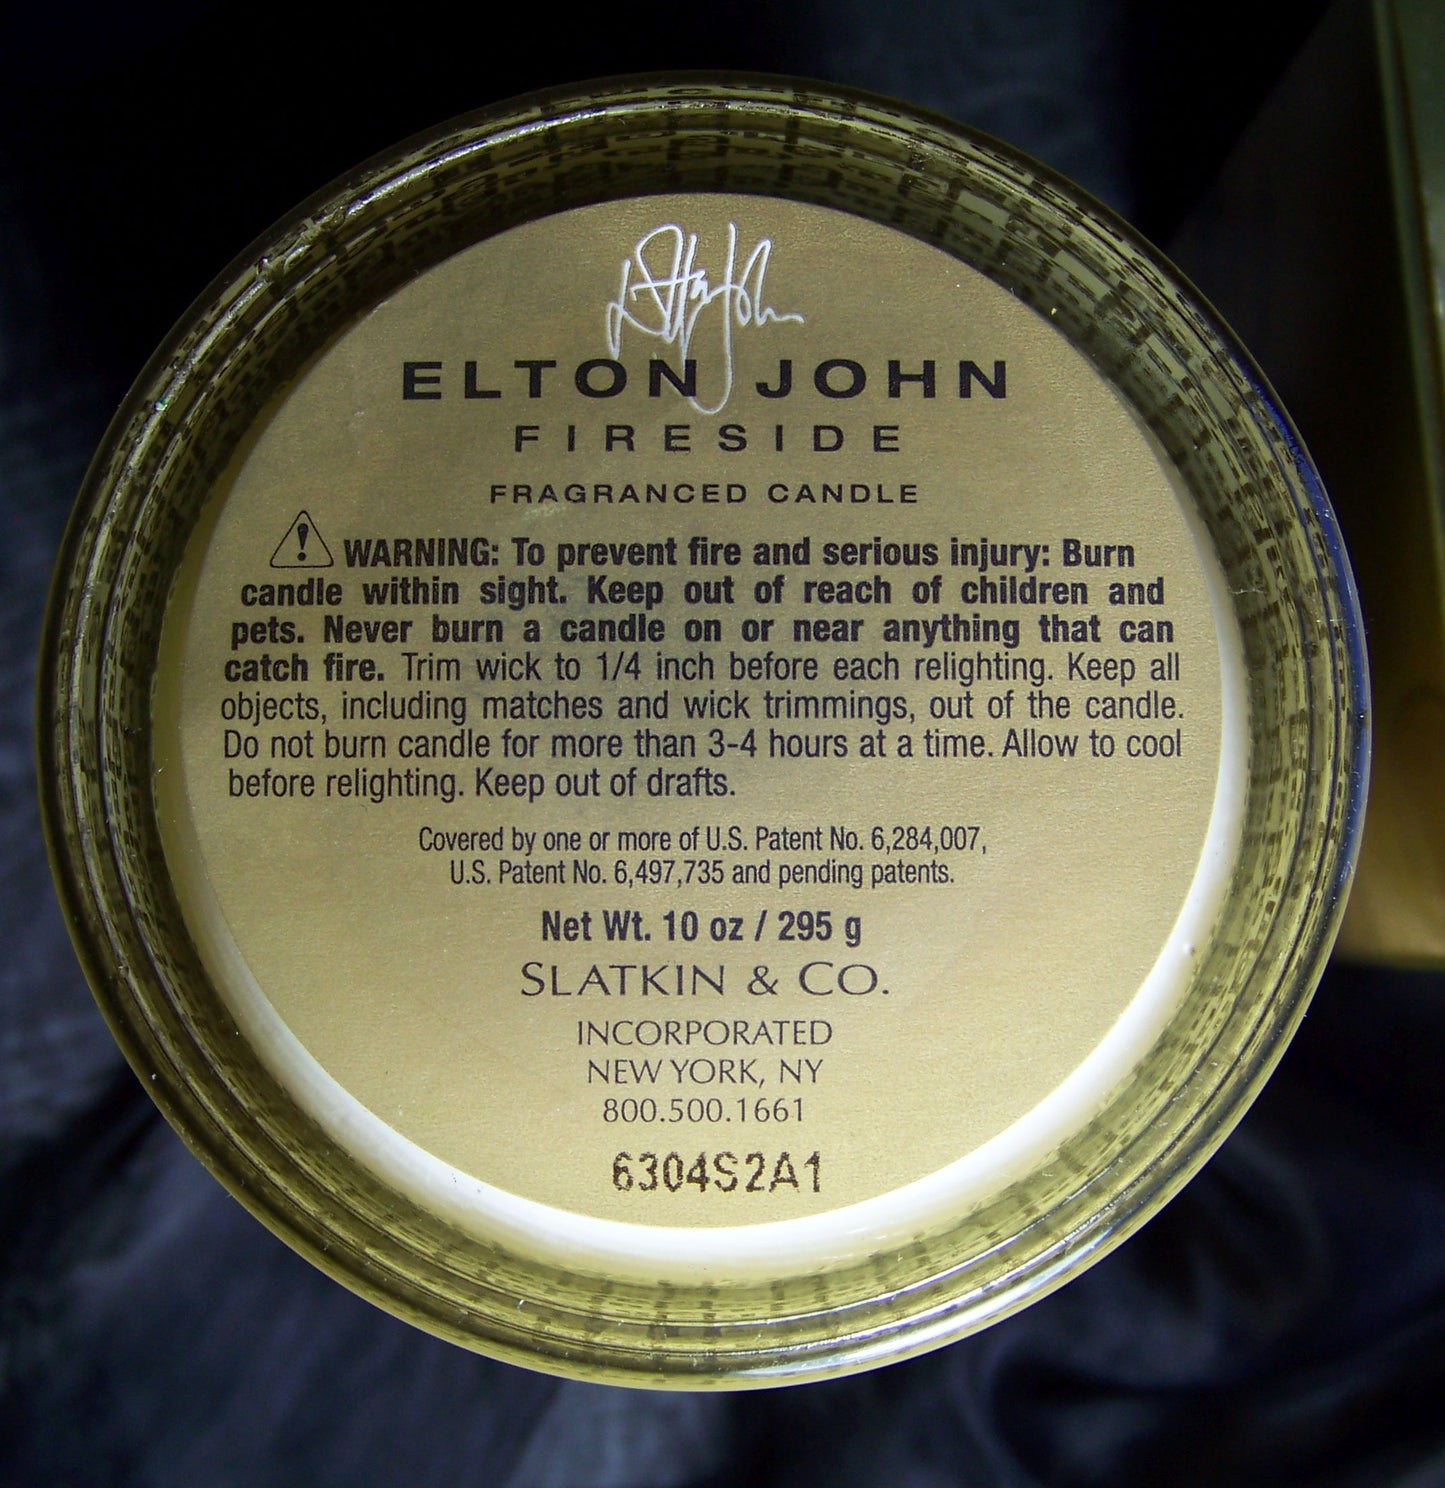 Elton John Fireside Candle and Tin Companion Candle Combo - Very Rare -  -